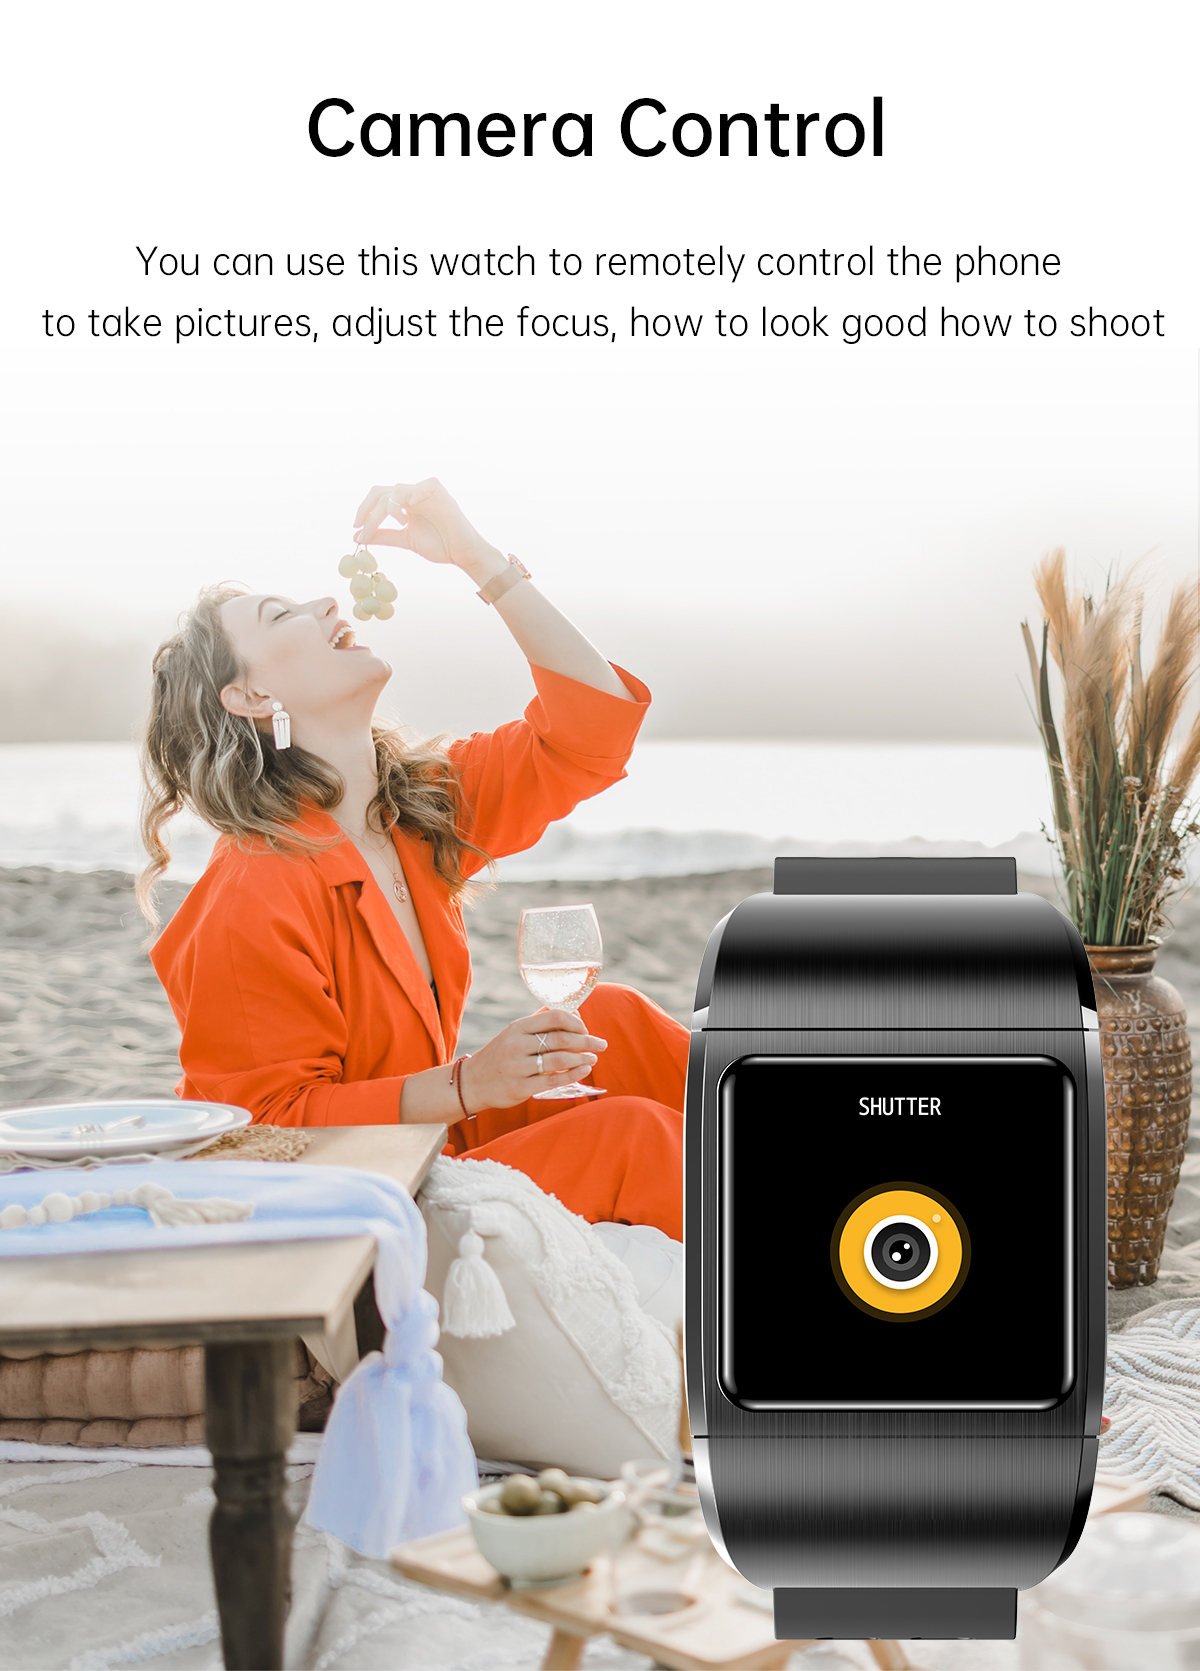 2 in 1 Android Smart Watch Tws Auricolare Bluetooth Ecg Frequenza cardiaca Pressione sanguigna Fitness Tracker Touch Display Ios Auricolari wireless con Smartwatch Reloj Inteligente